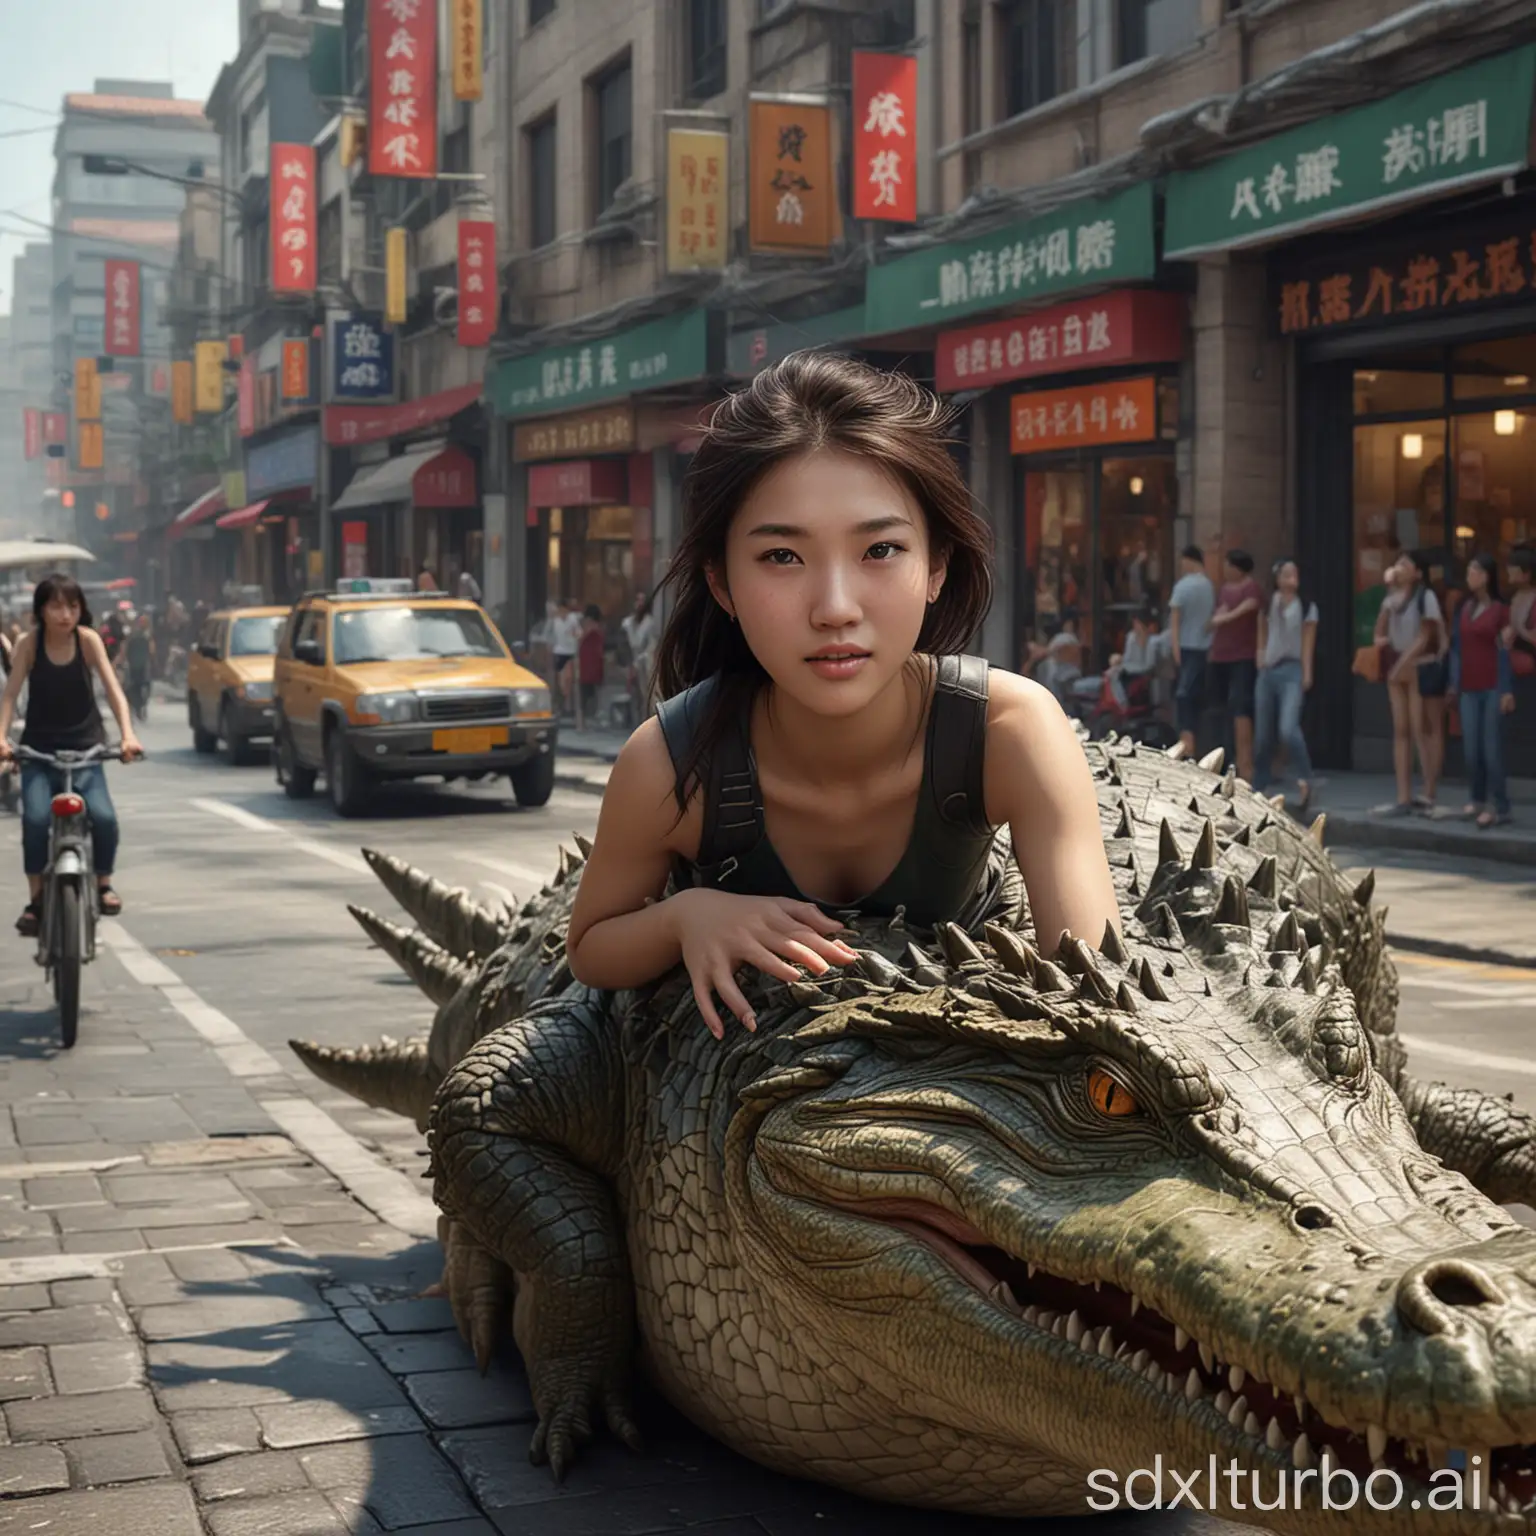 Vibrant-Urban-Scene-Chinese-Girl-Riding-Crocodile-in-Modern-City